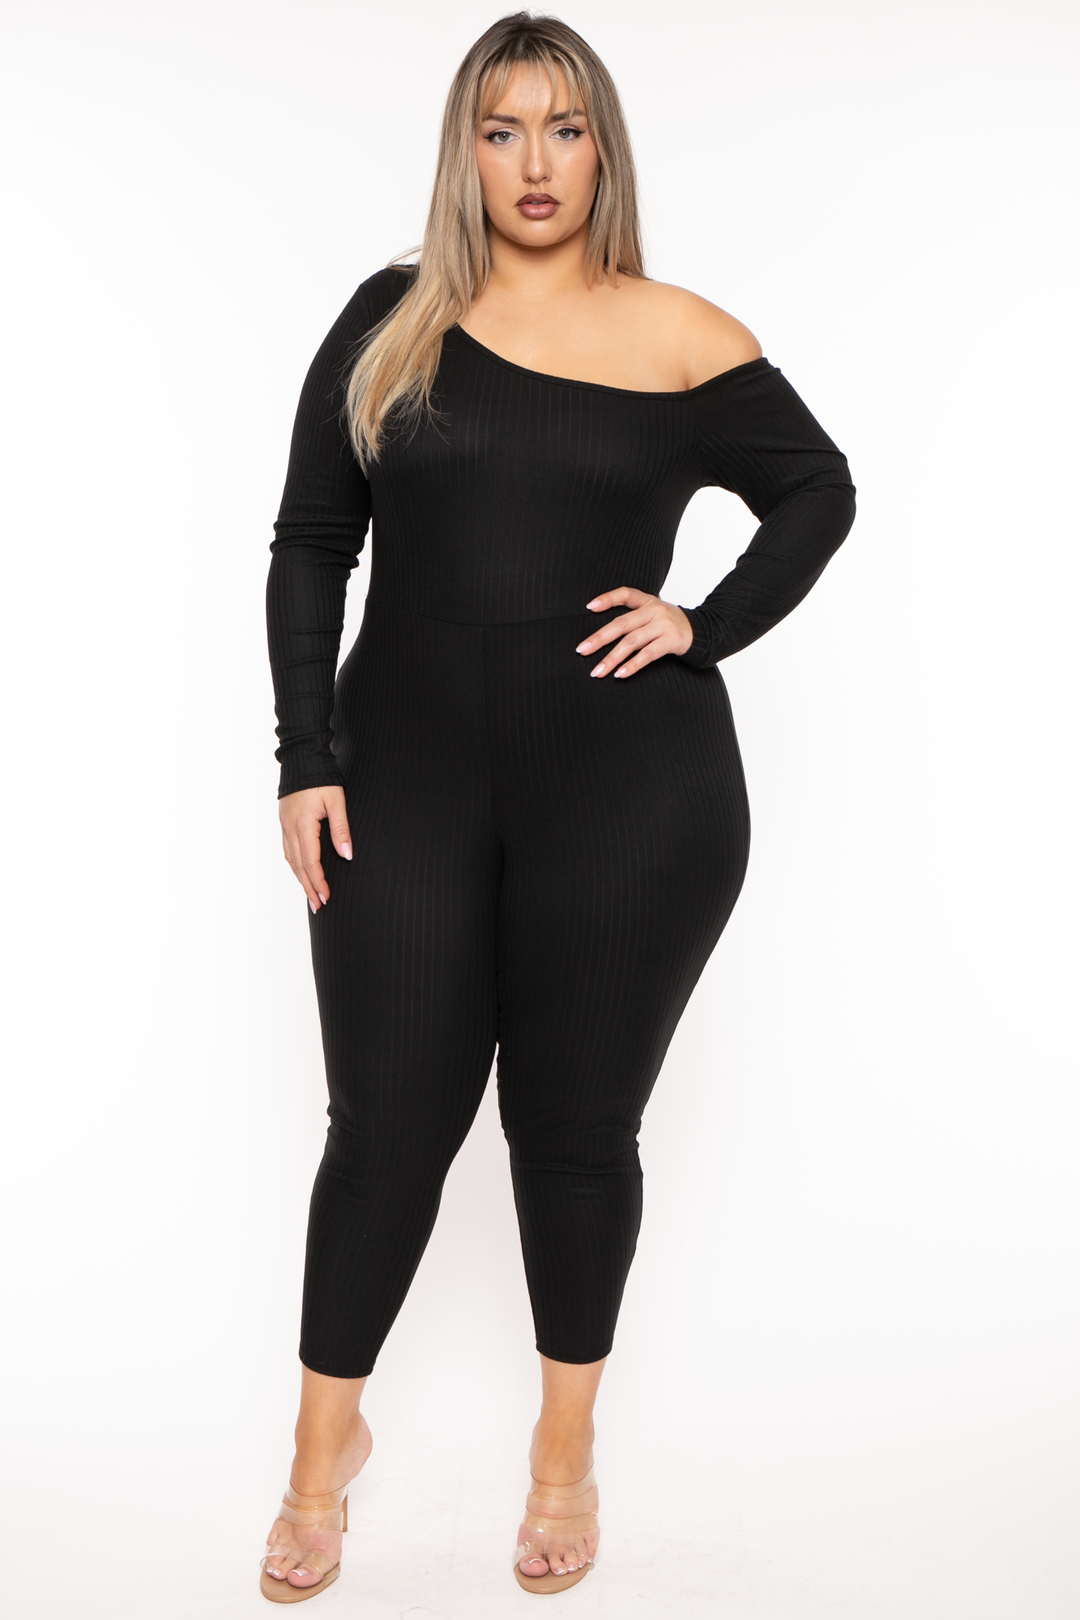 Sexy Long Sleeve Black Spandex Jumpsuit For Women Plus Size 2X